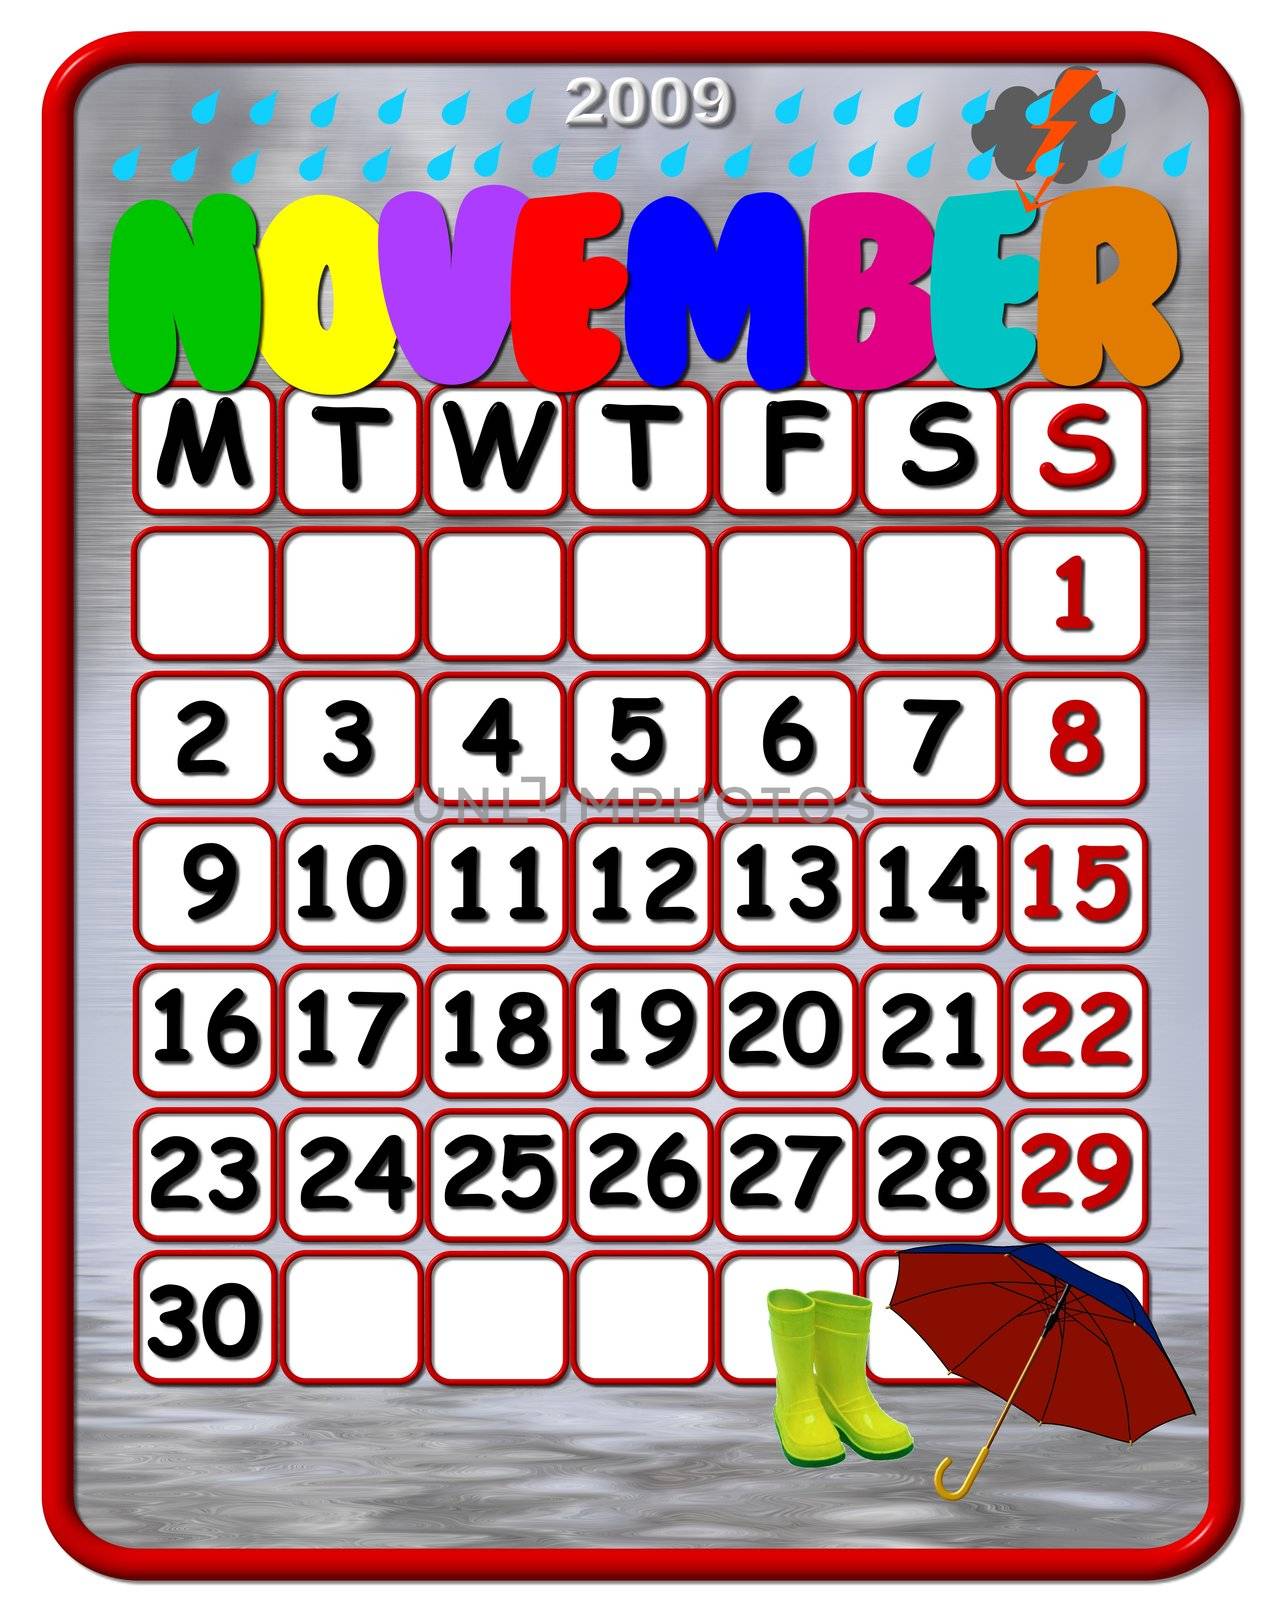 funny calendar november 2009 by peromarketing